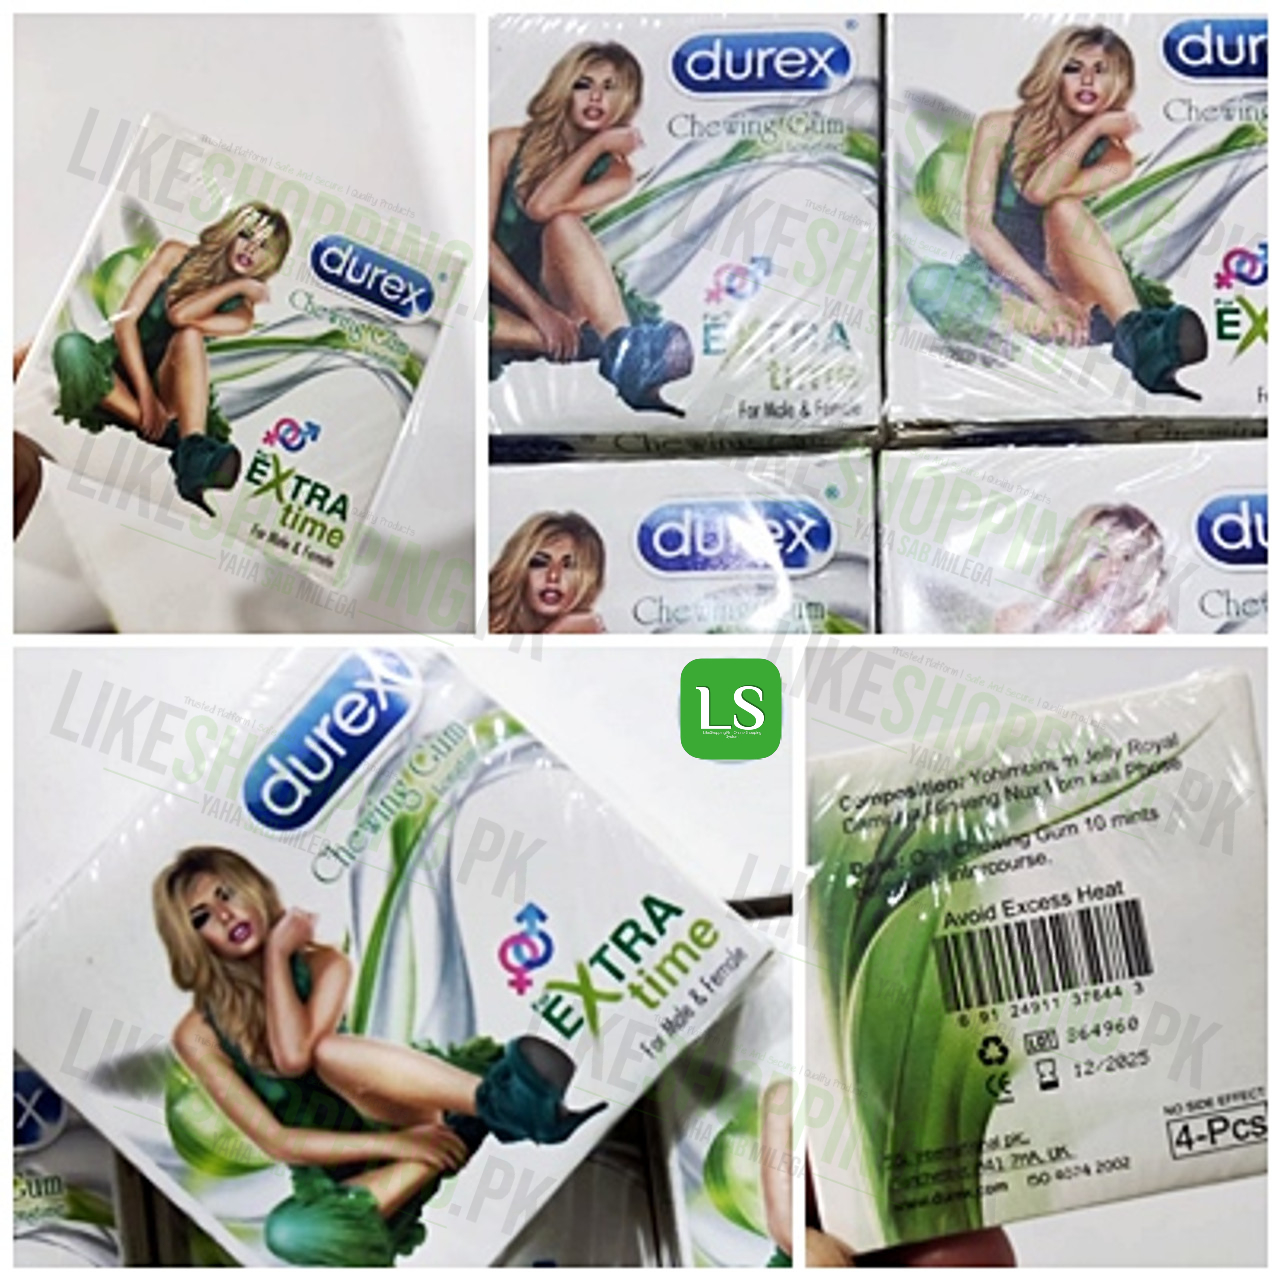 Durex Chewing Gum 0300-1300647 - Online Shopping in Pakistan,Lahore,Karachi,Islamabad,Bahawalpur,Peshawar,Multan,Rawalpindi - LikeShopping.Pk